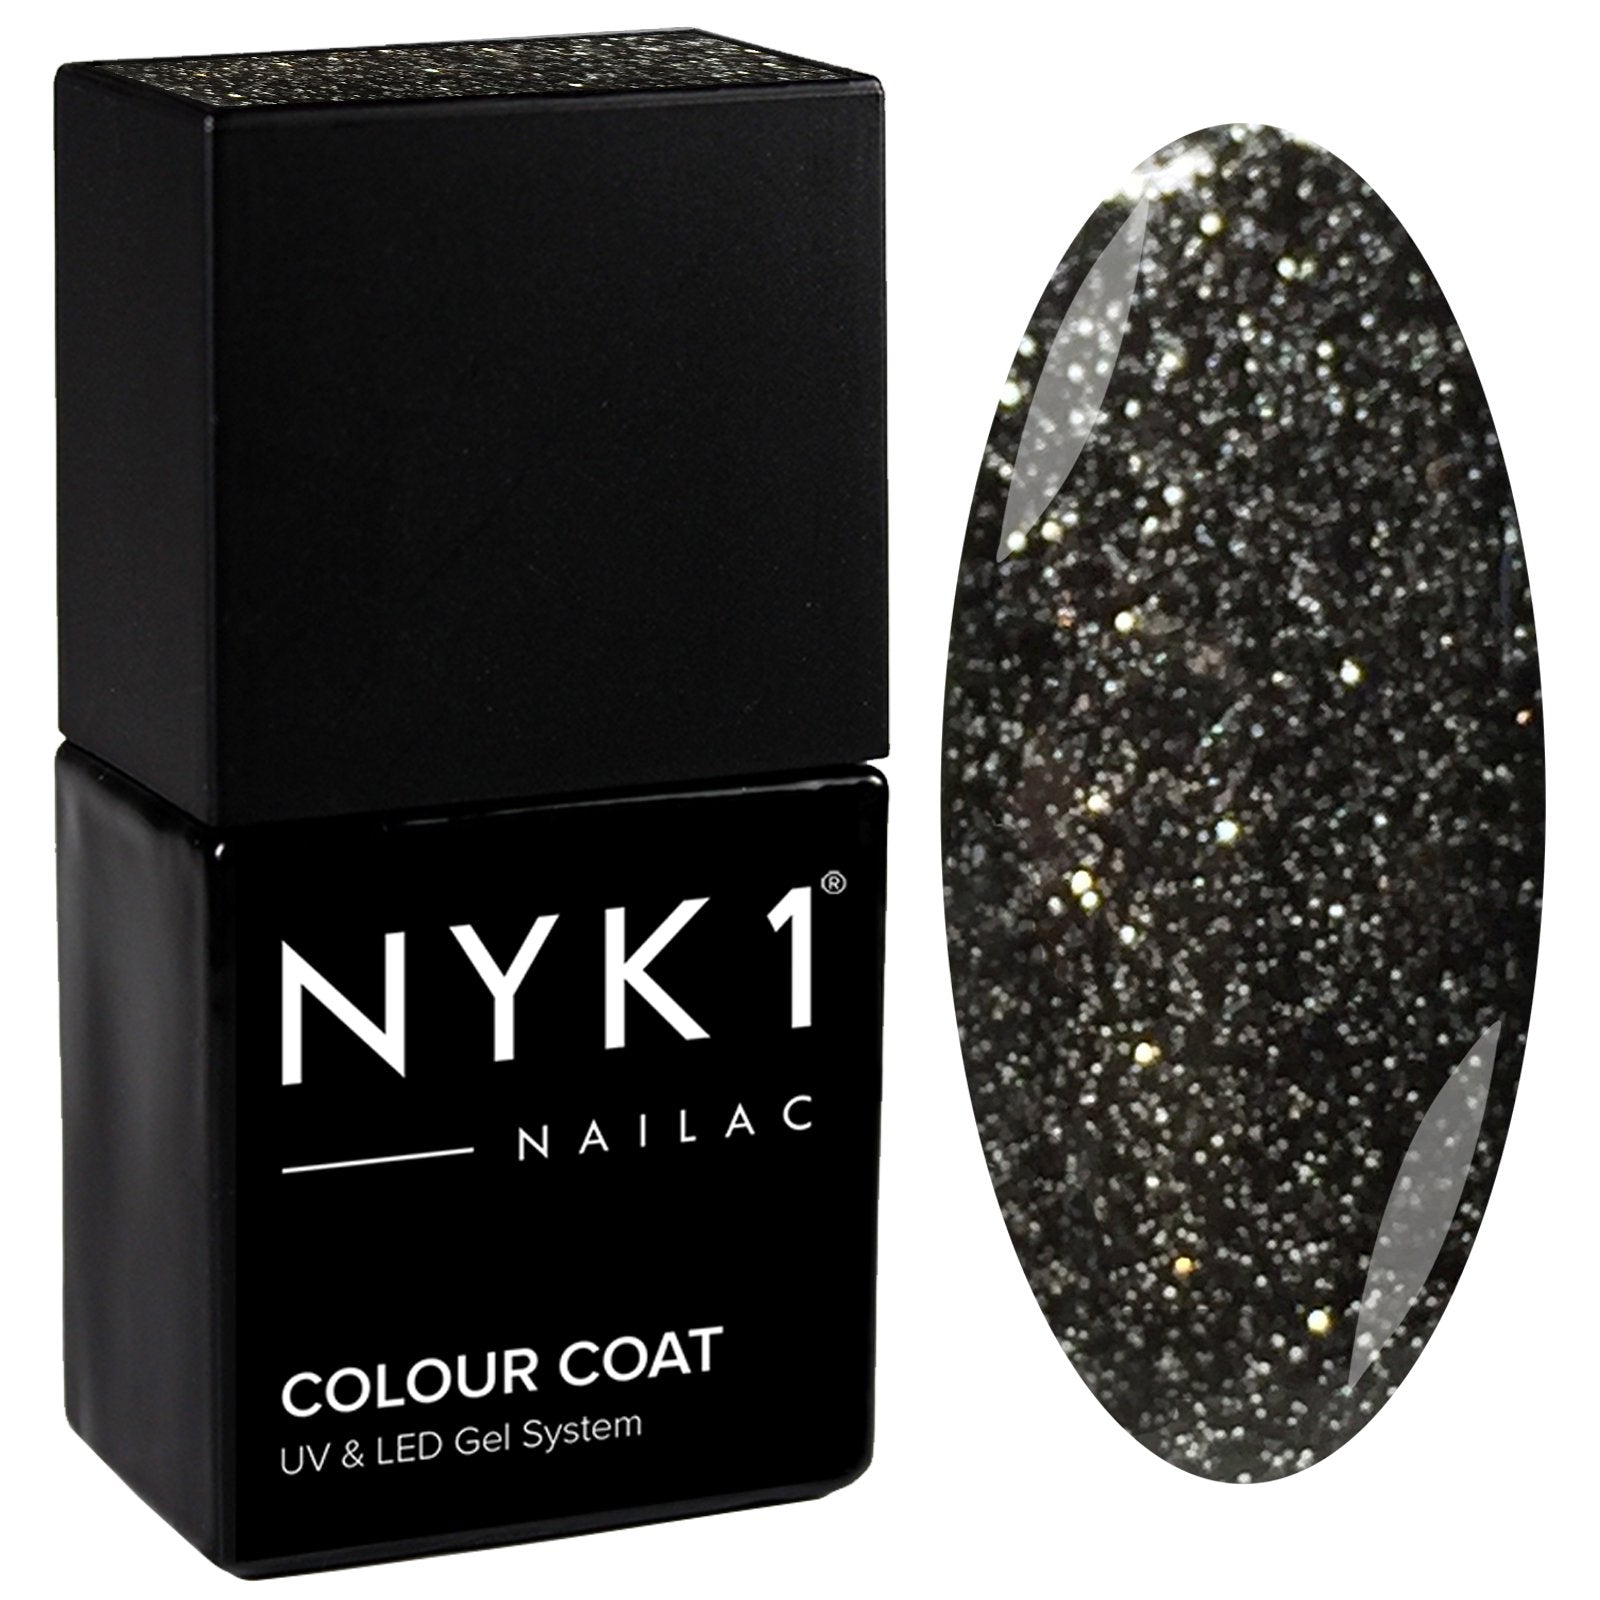 NYK1 Nailac Graphite Sparkle Deep Black Glitter Gel Nail Polish